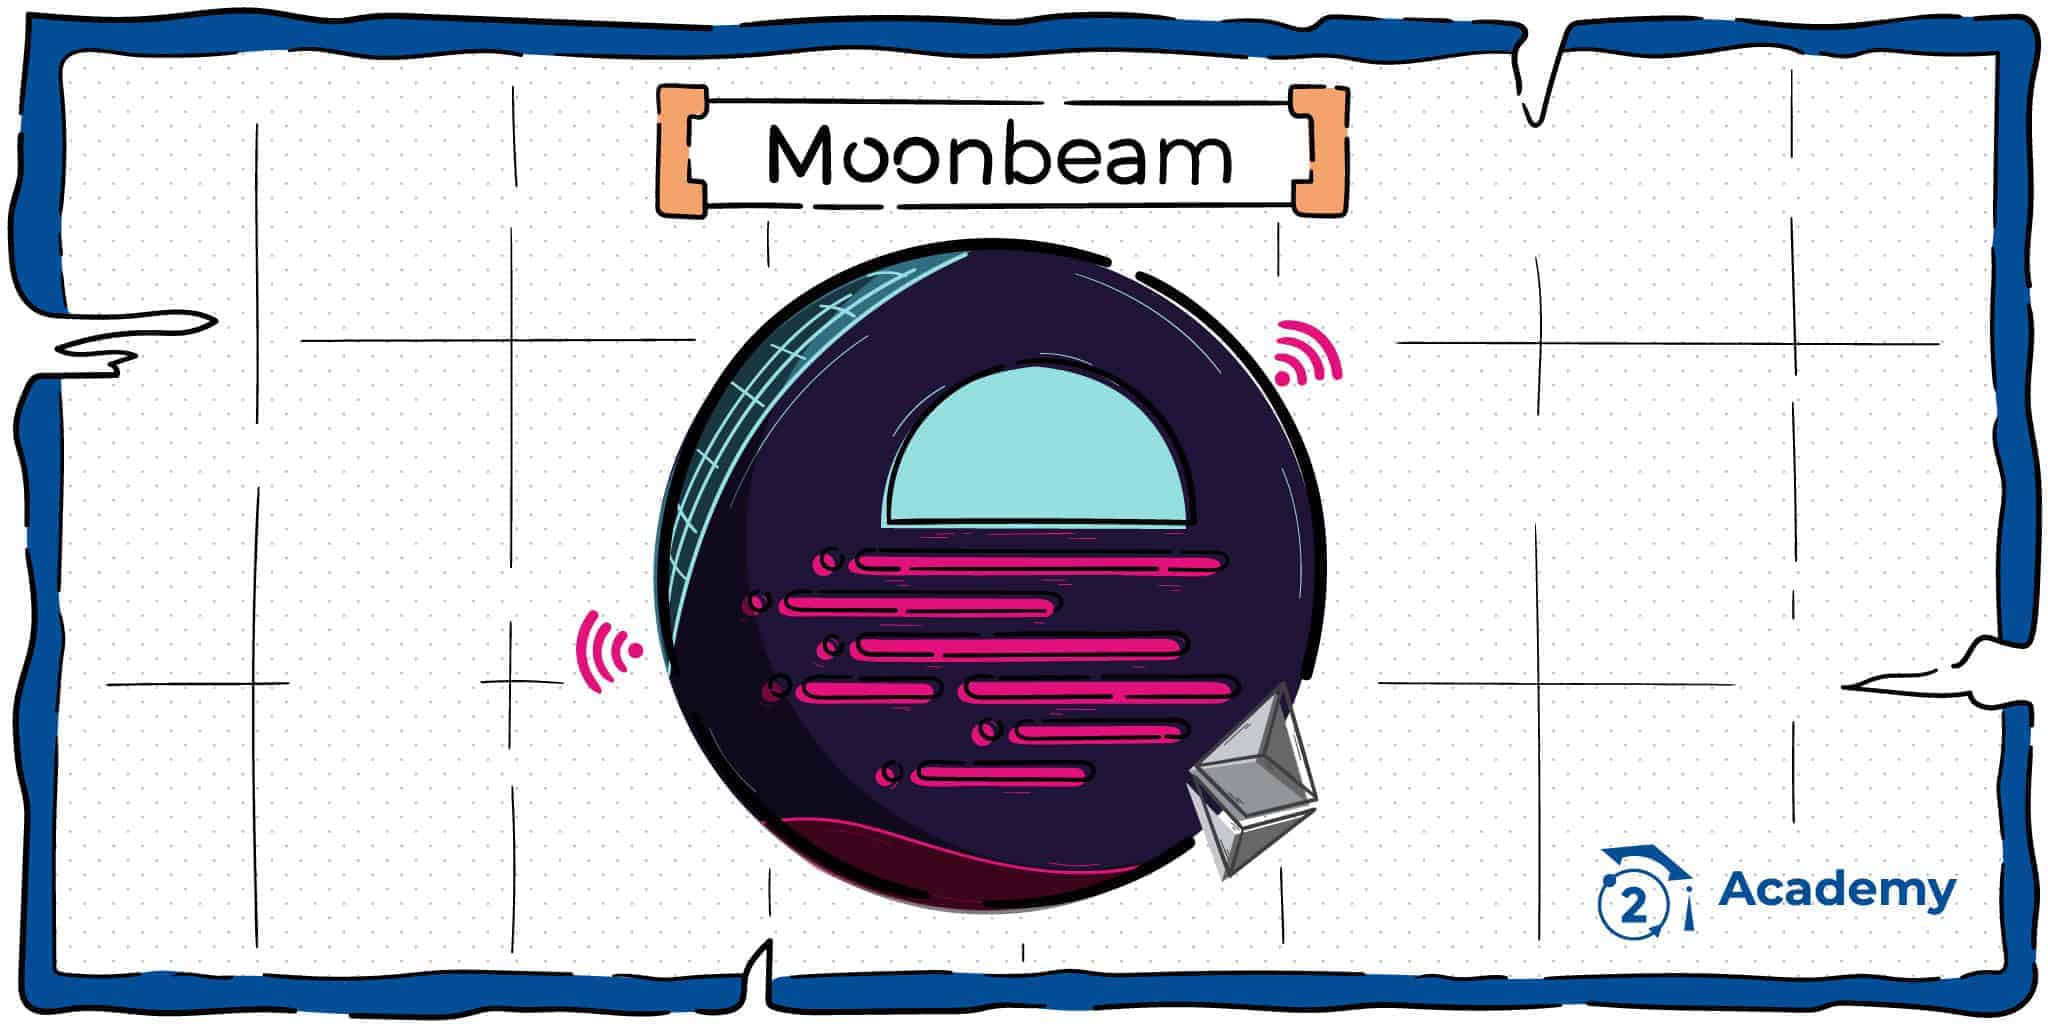 moonbeam-bit2meacademy